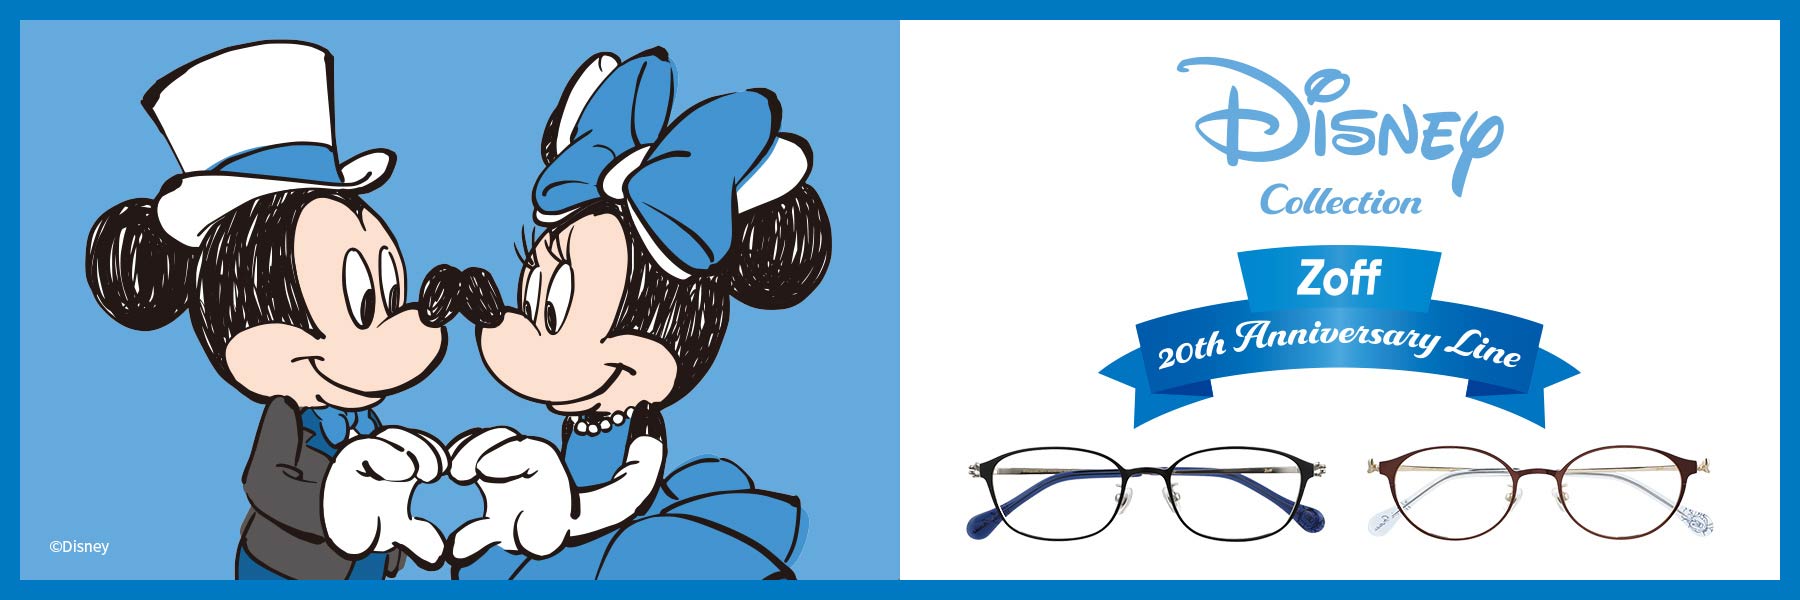 Disney Collection - Zoff 20th Anniversary Line